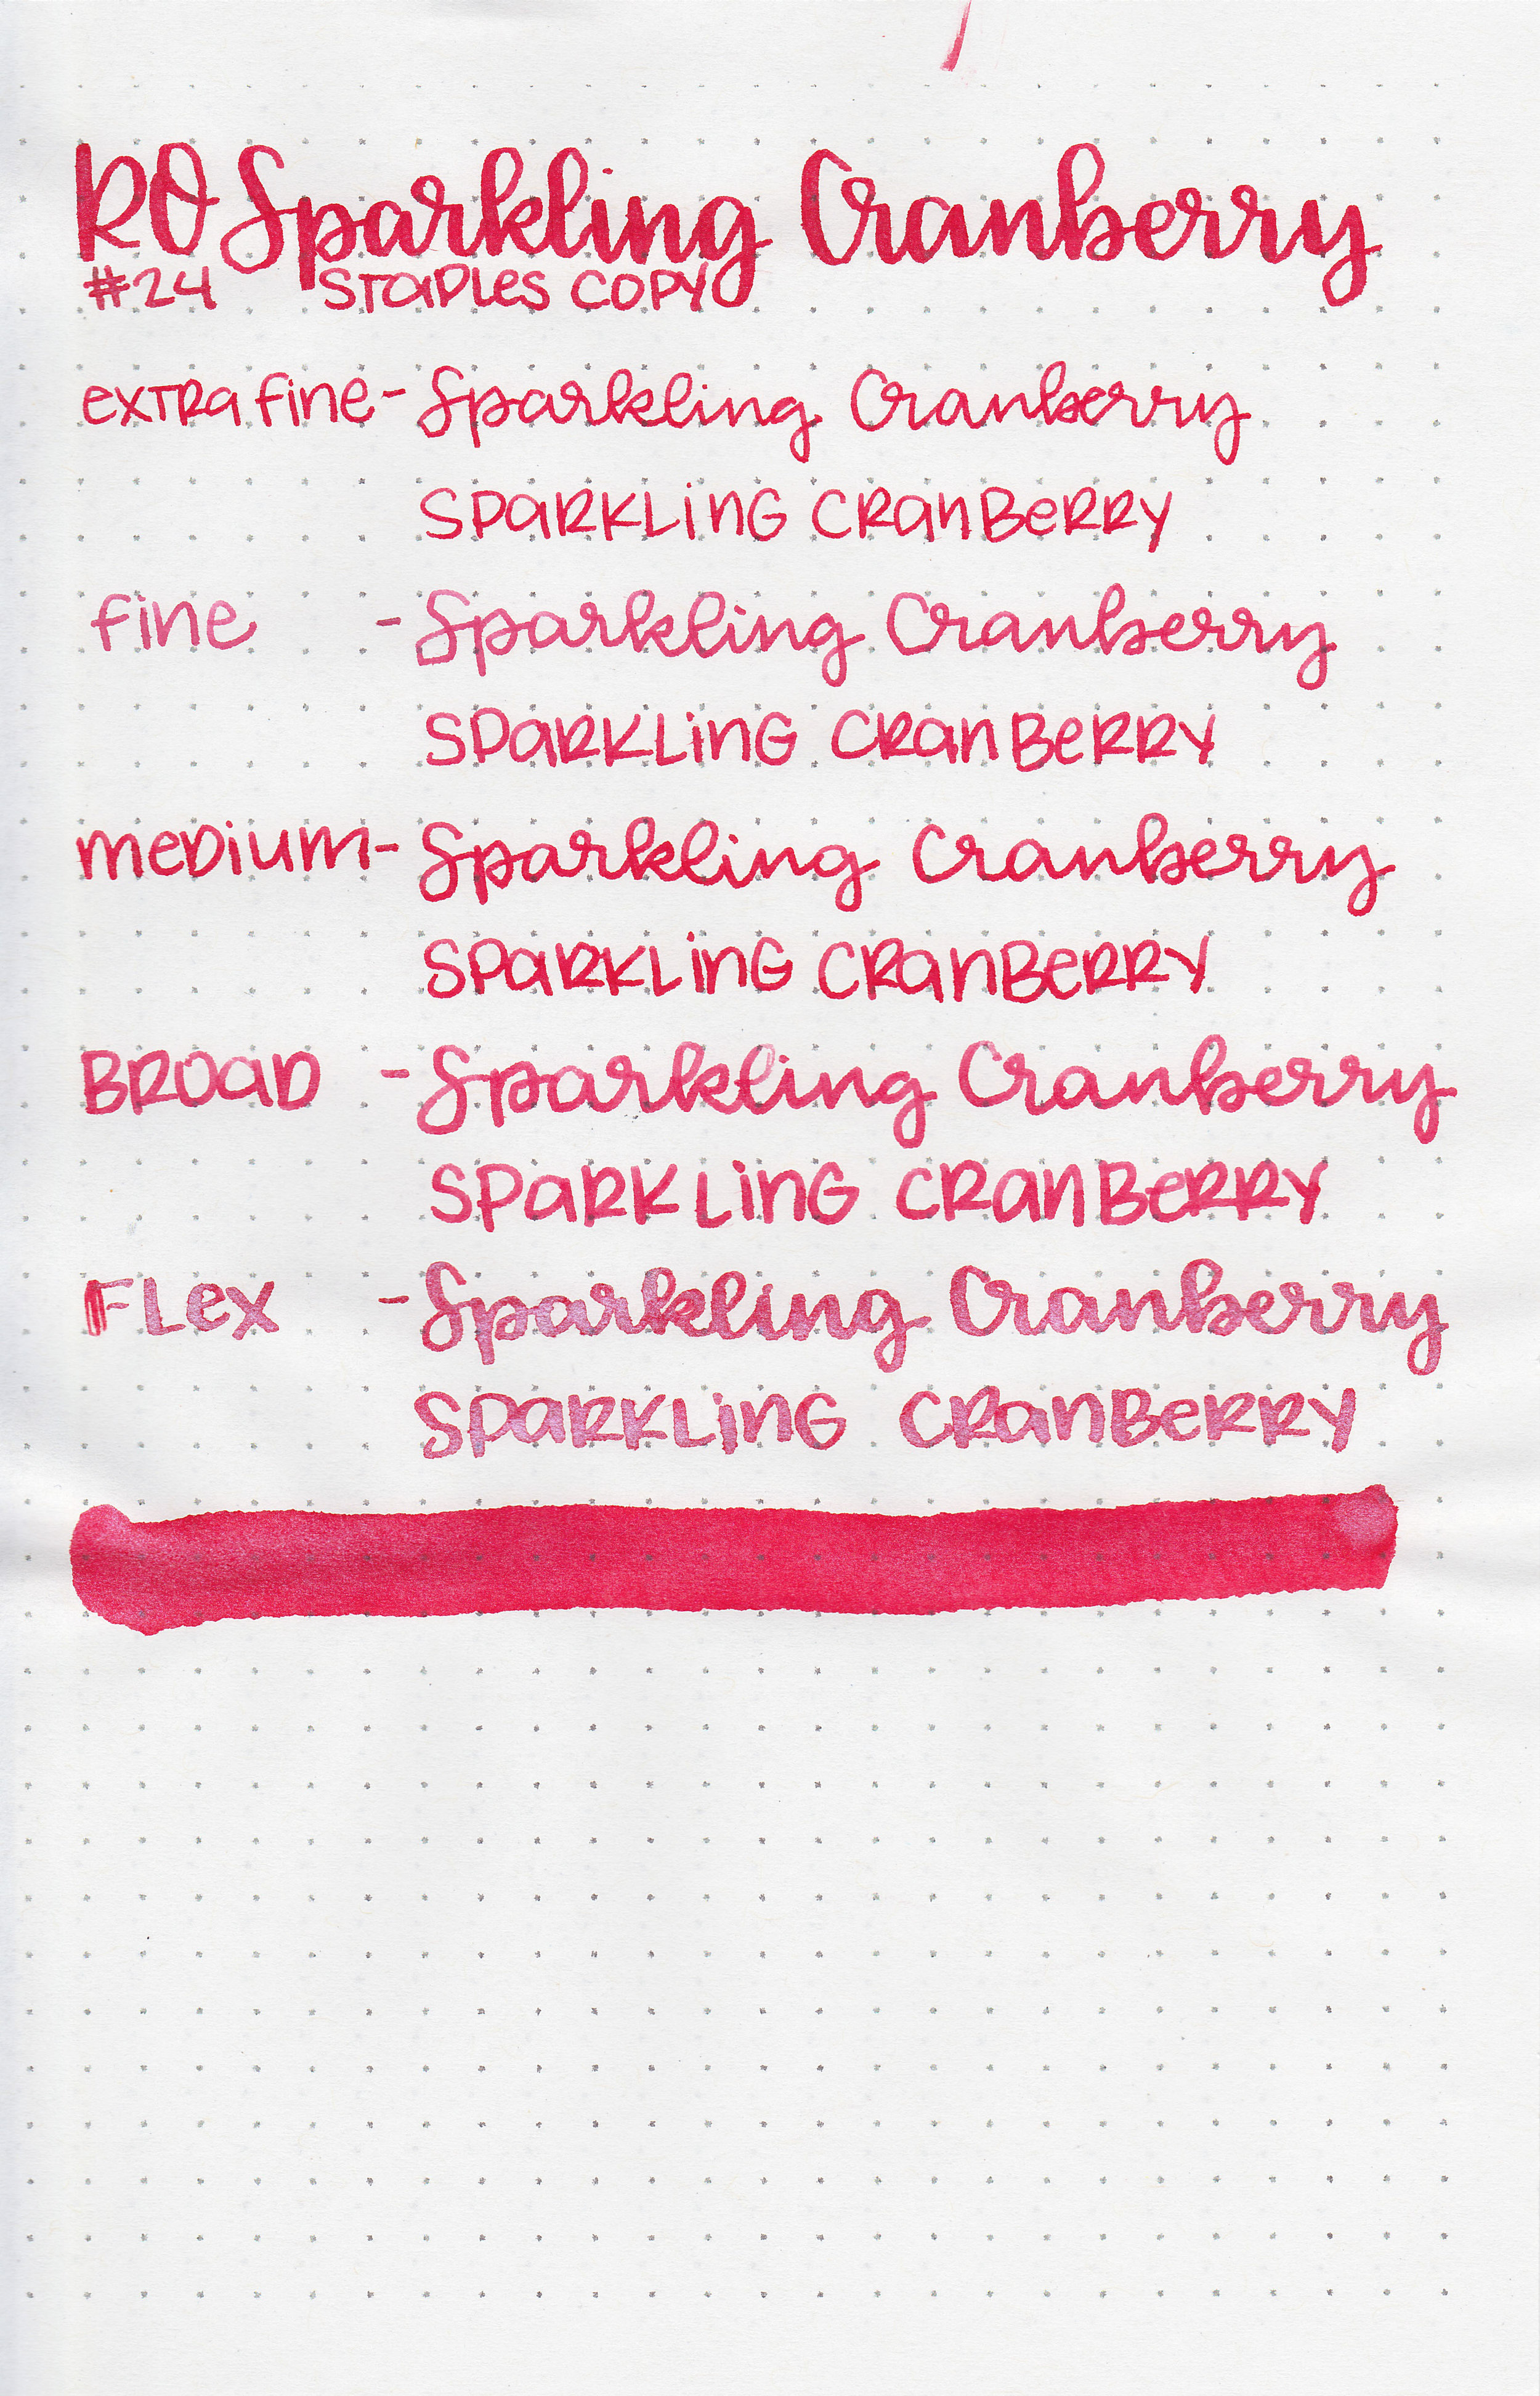 ro-sparkling-cranberry-10.jpg